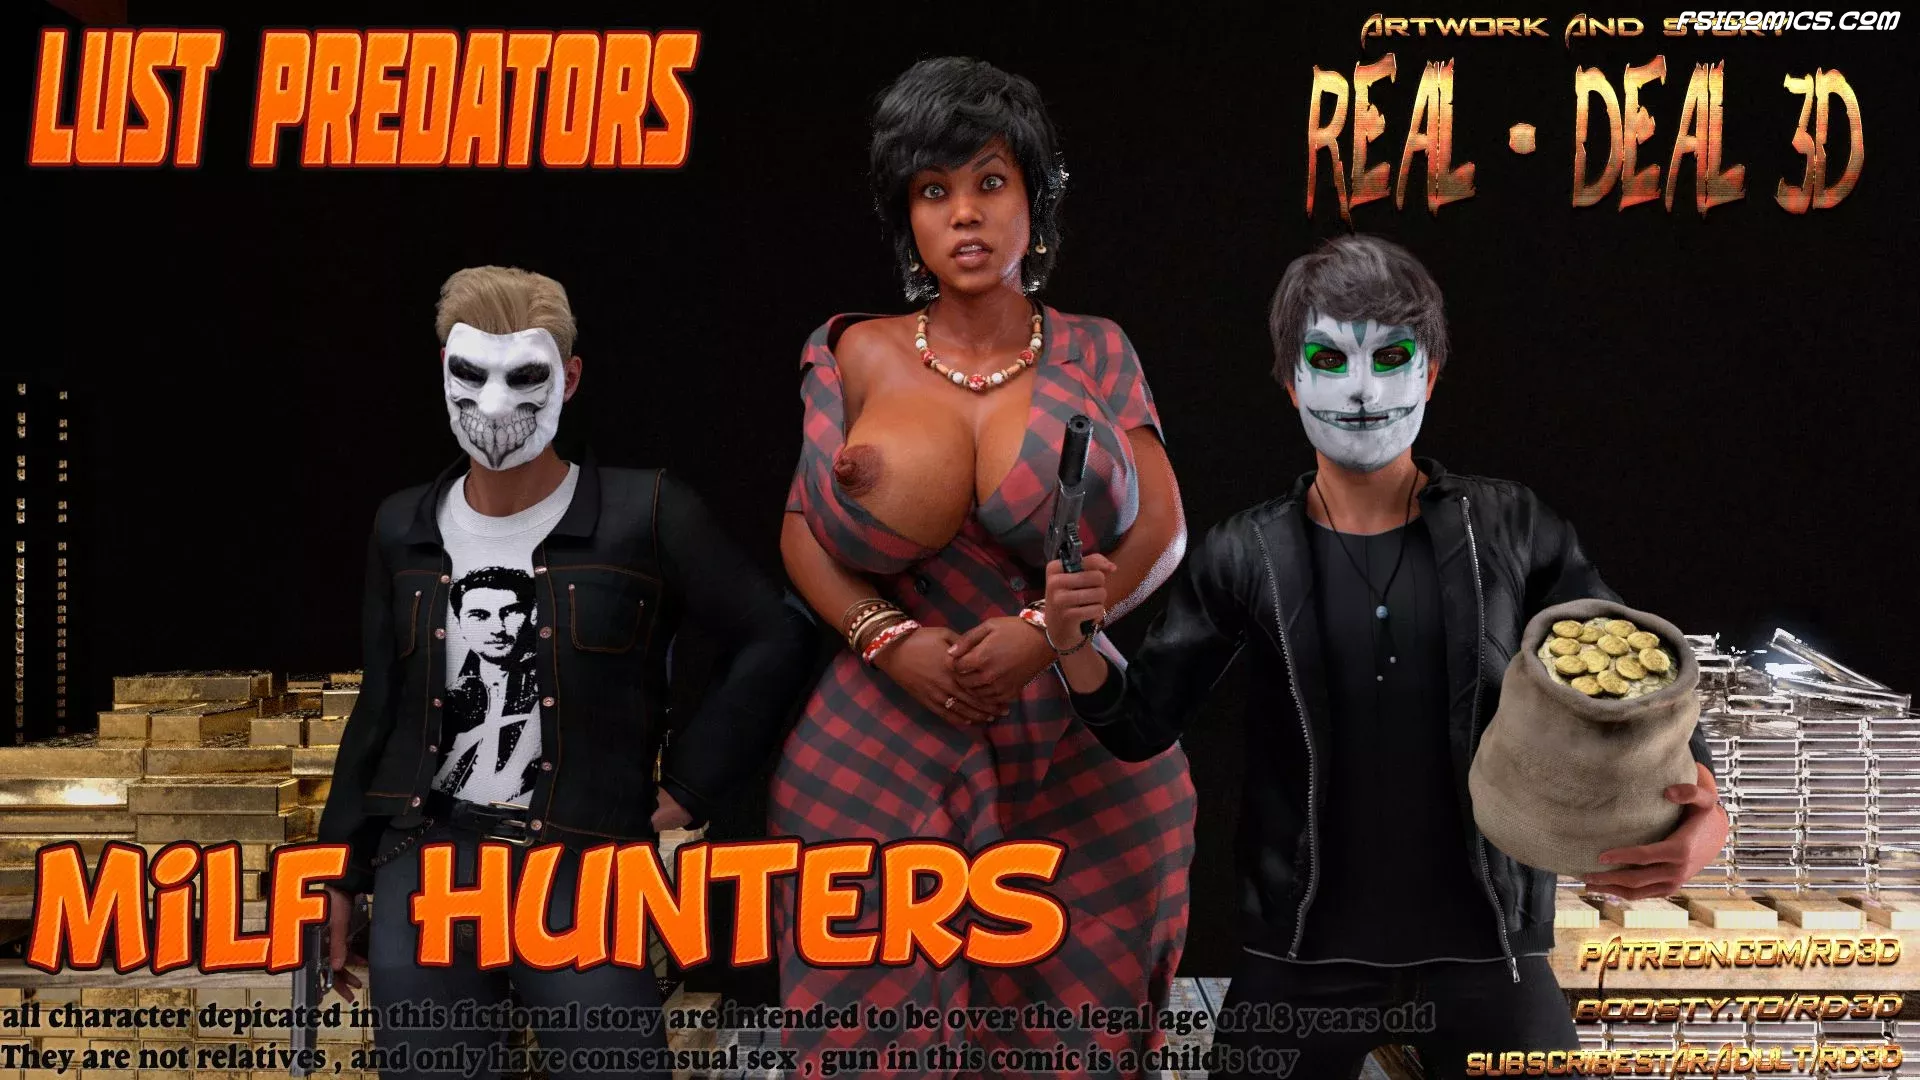 MILF Hunters Chapter 1 - Real Deal 3D - 11 - FSIComics